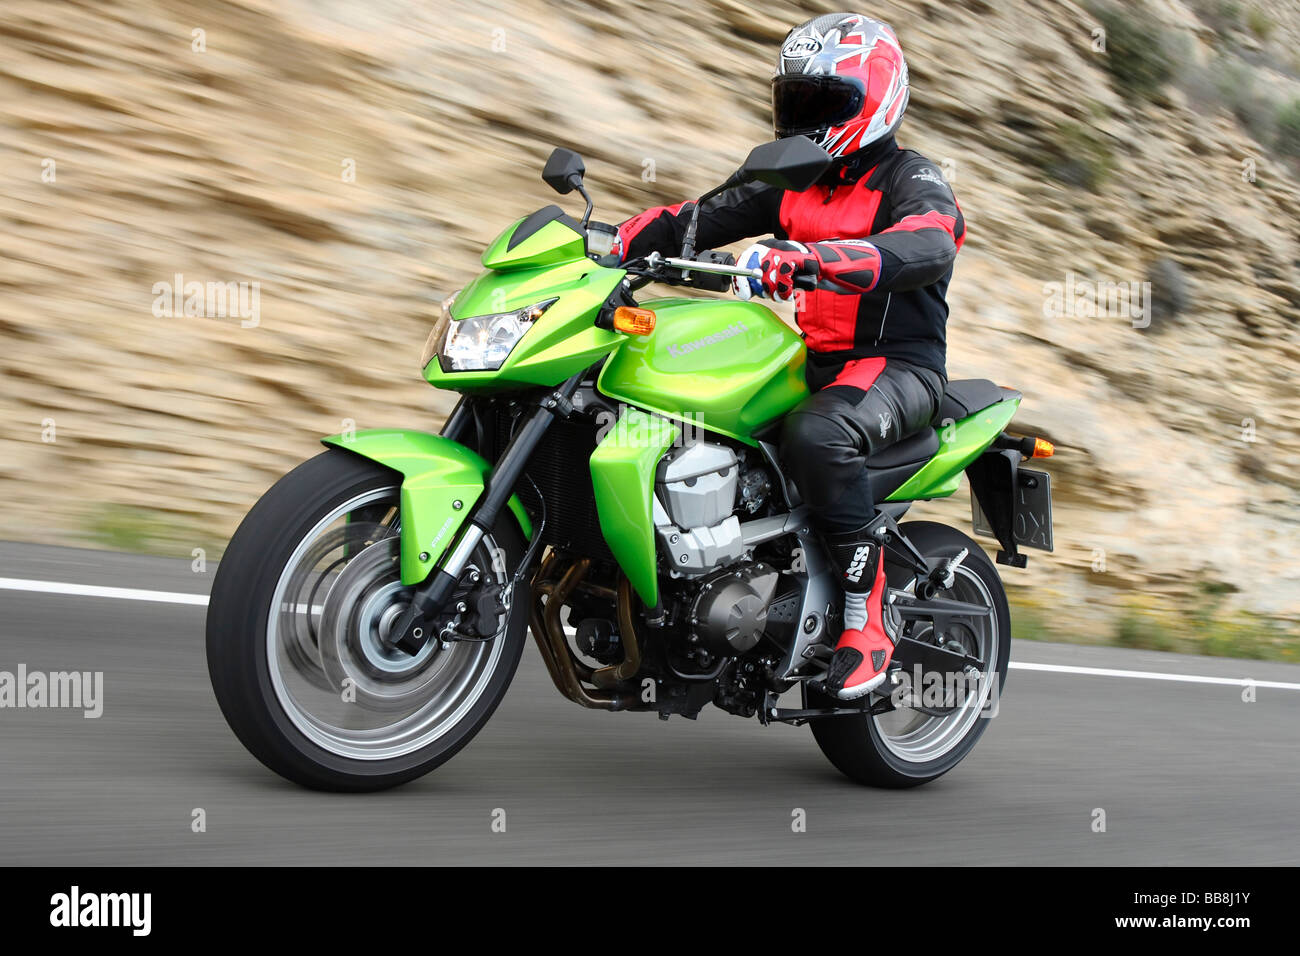 Kawasaki Z750 motorcycle, riding shot Stock Photo - Alamy